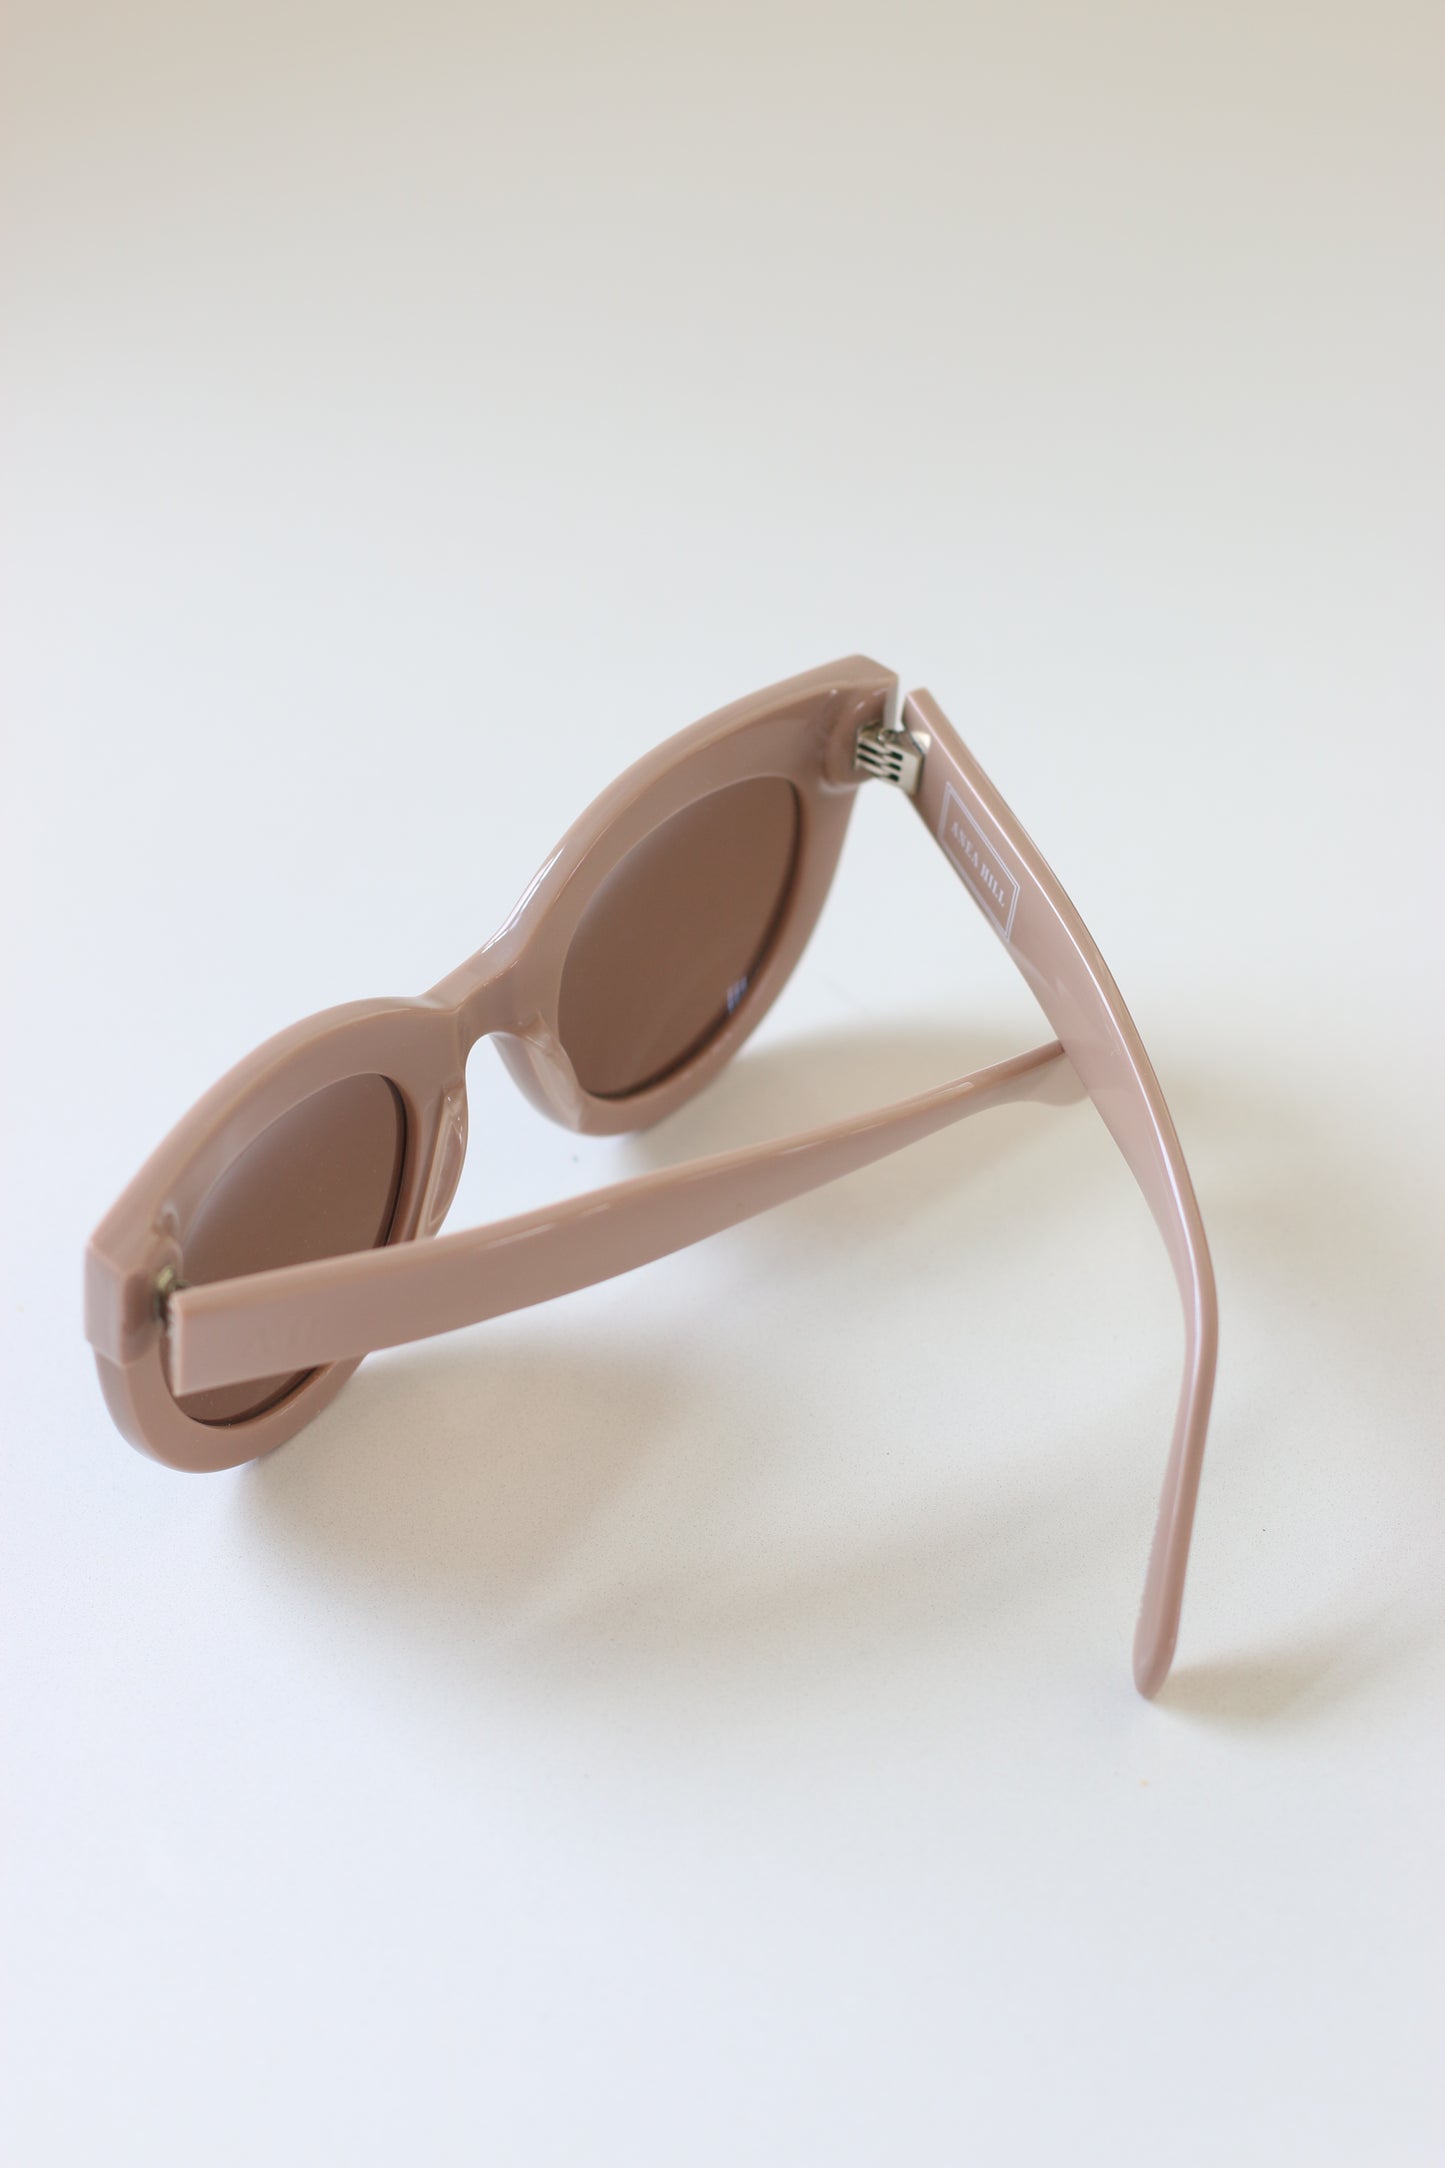 "ANEA HILL Duchess Sunglasses: Fashionable Eyewear for Women!"